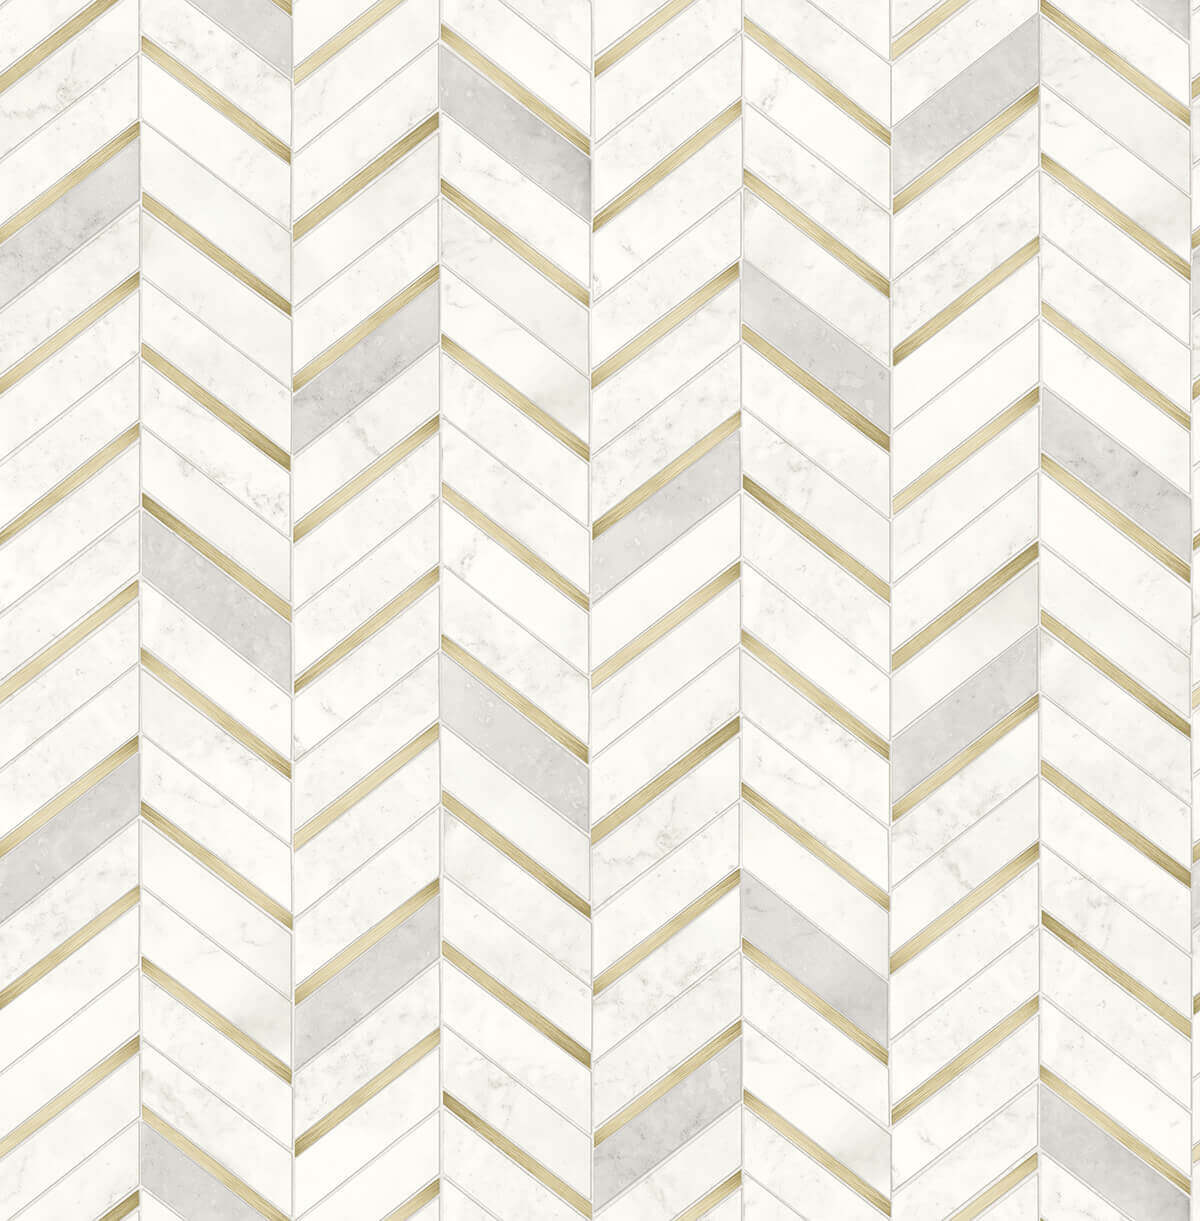 NextWall Chevron Tile Peel and Stick Wallpaper - SAMPLE